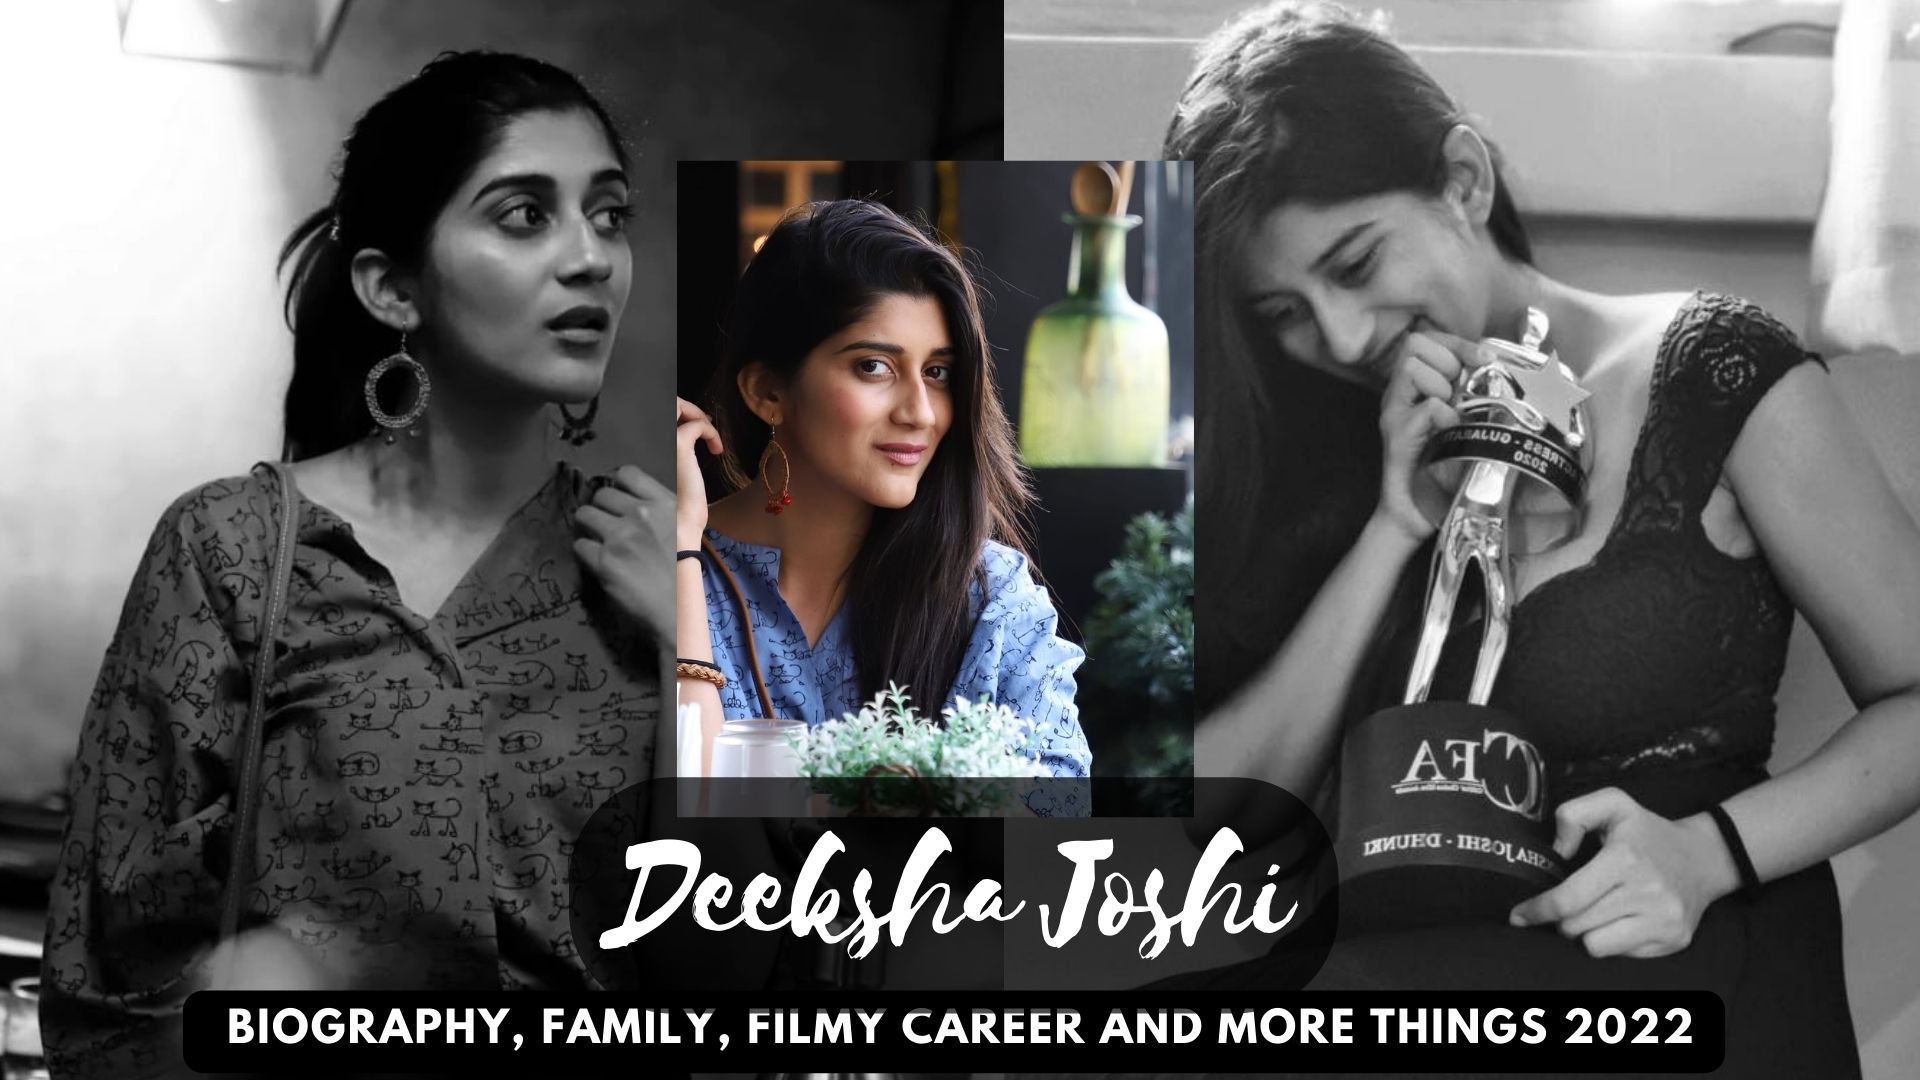 Deeksha Joshi Biography Childhood Movies Awards Upcoming Films